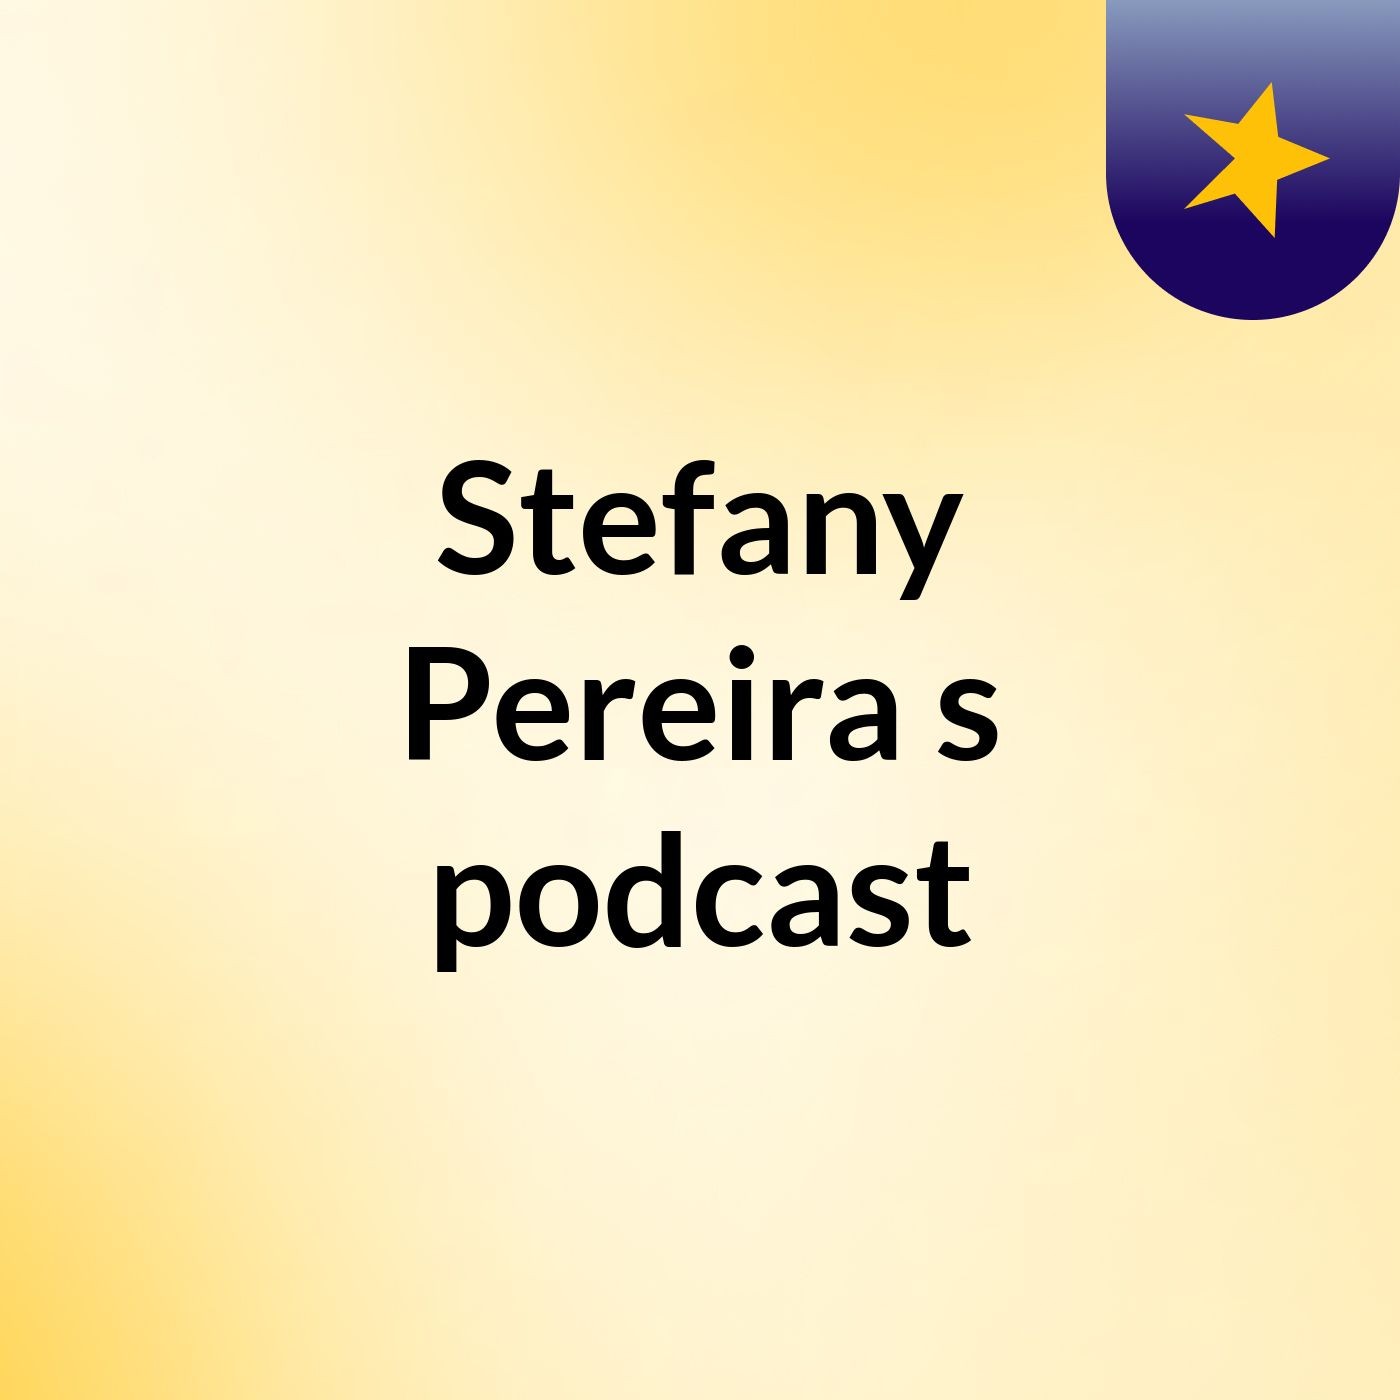 Stefany Pereira's podcast